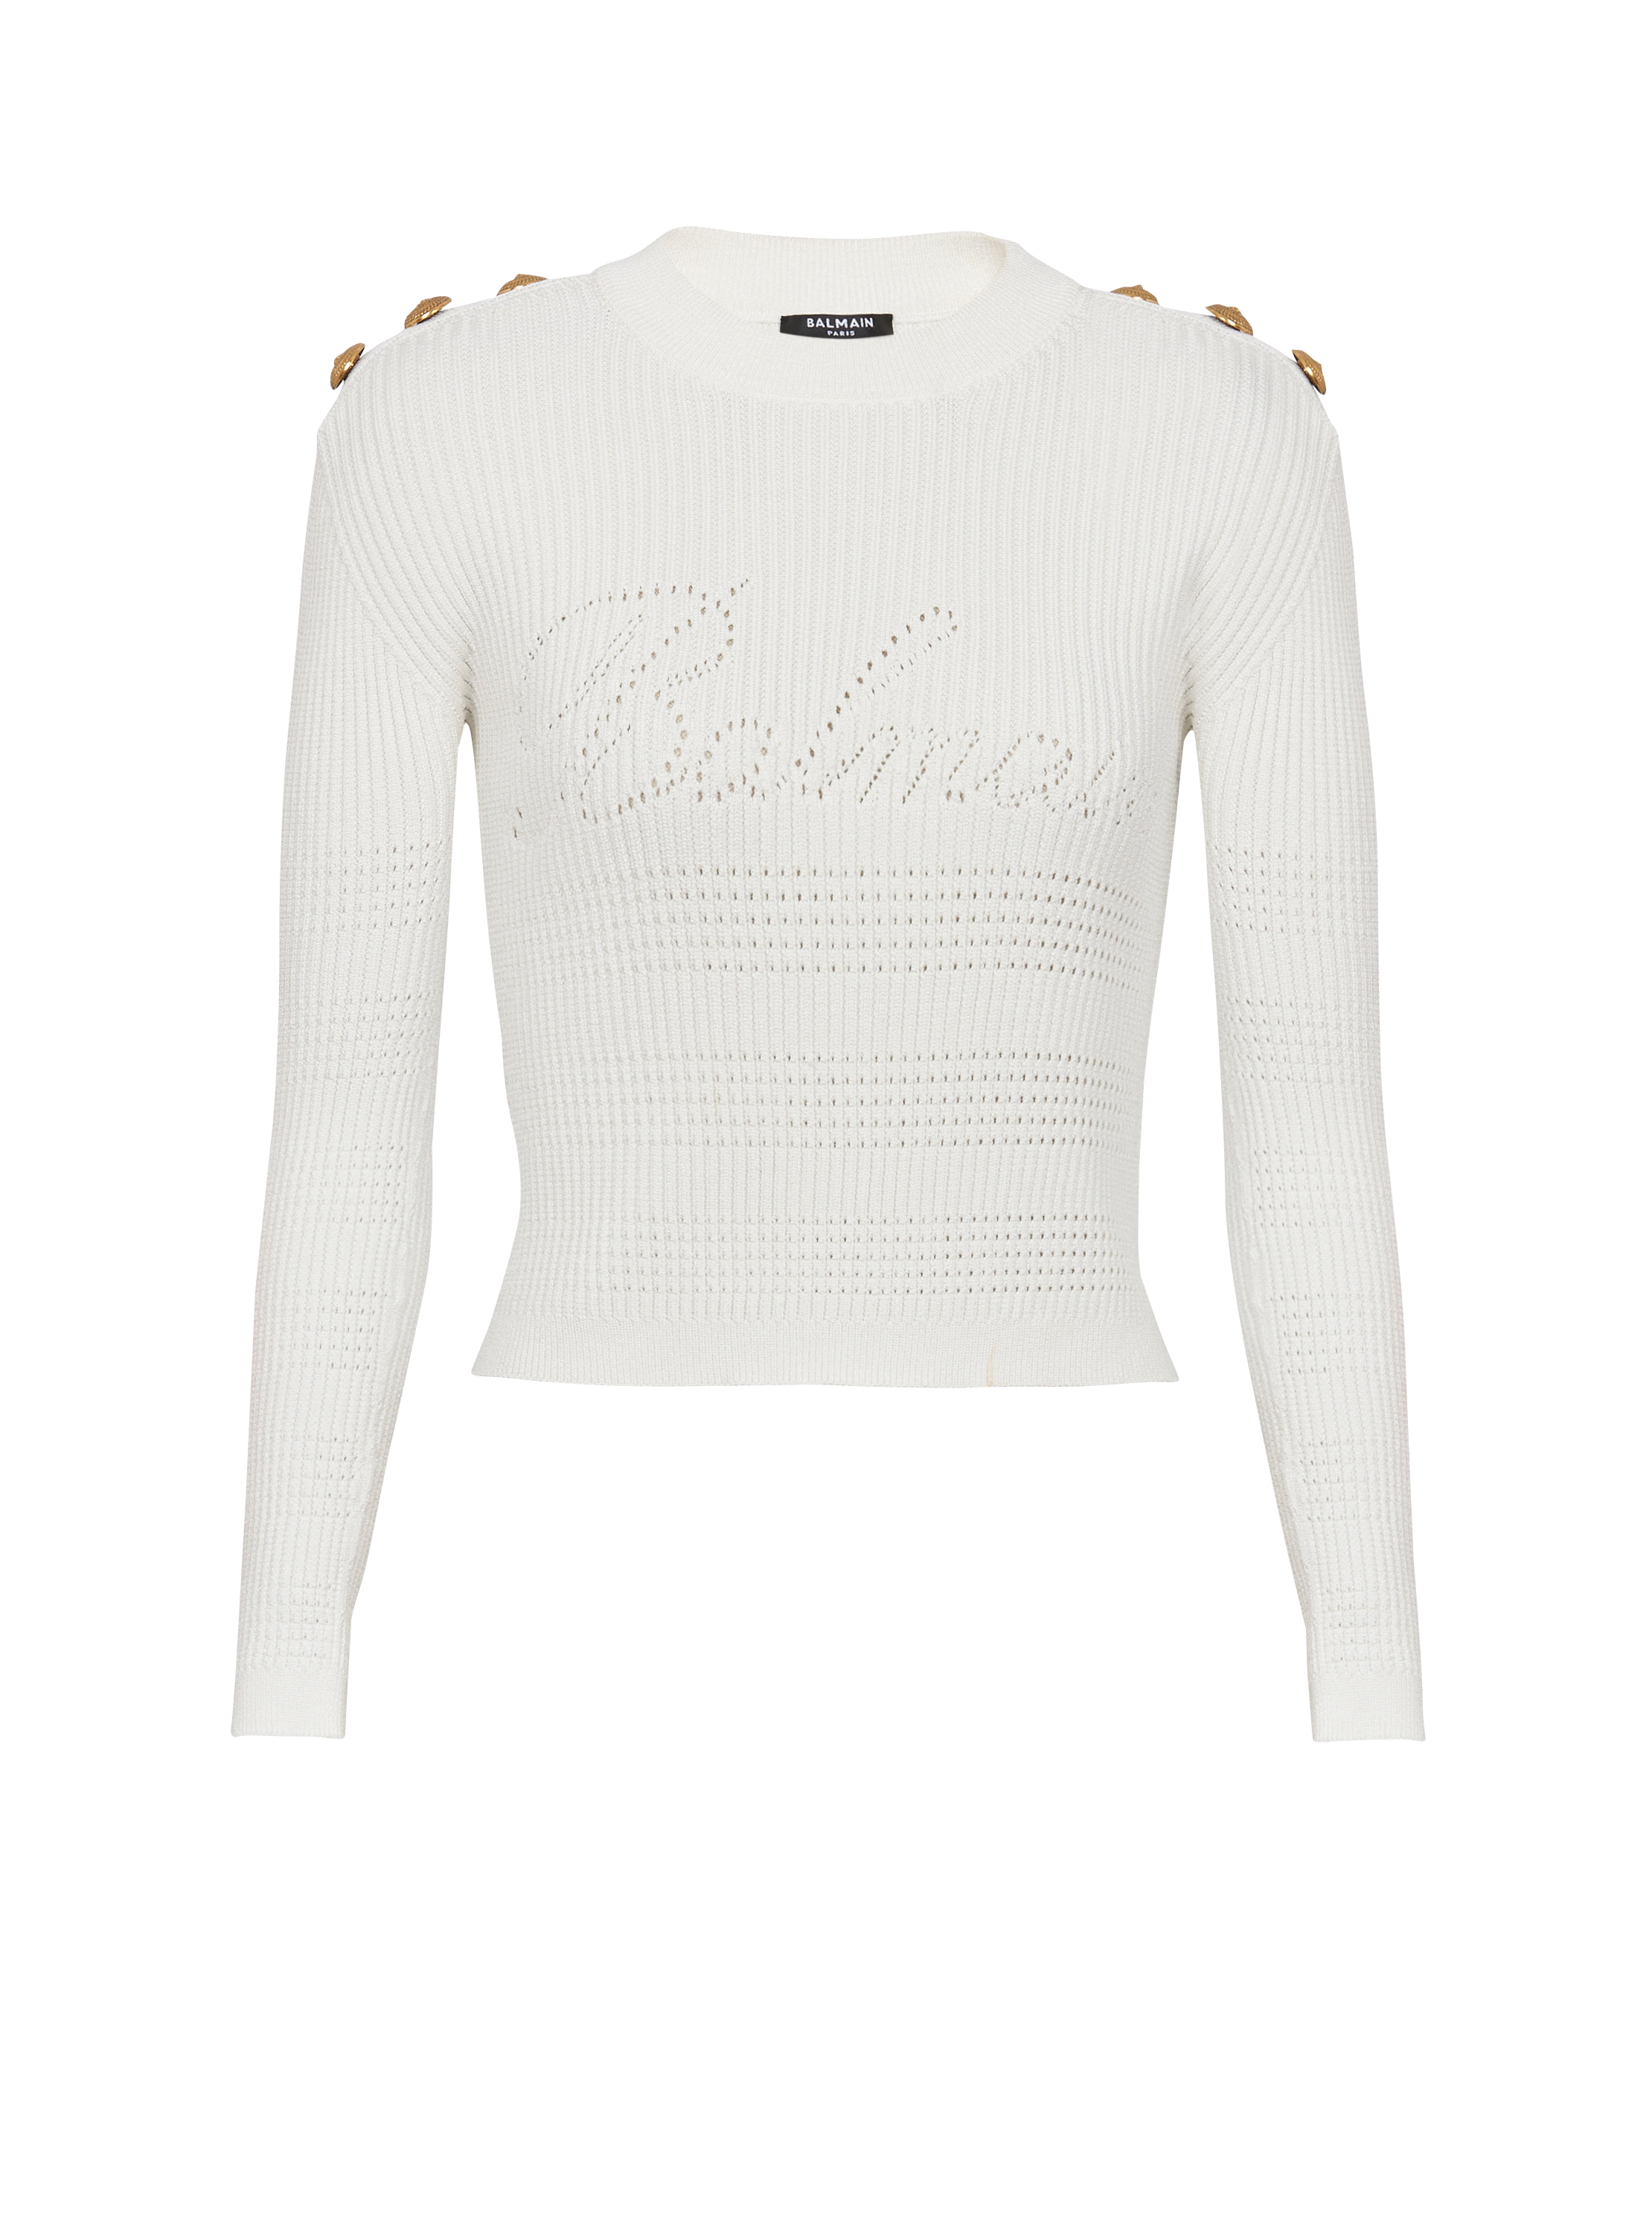 Balmain Signature knit jumper, white, hi-res